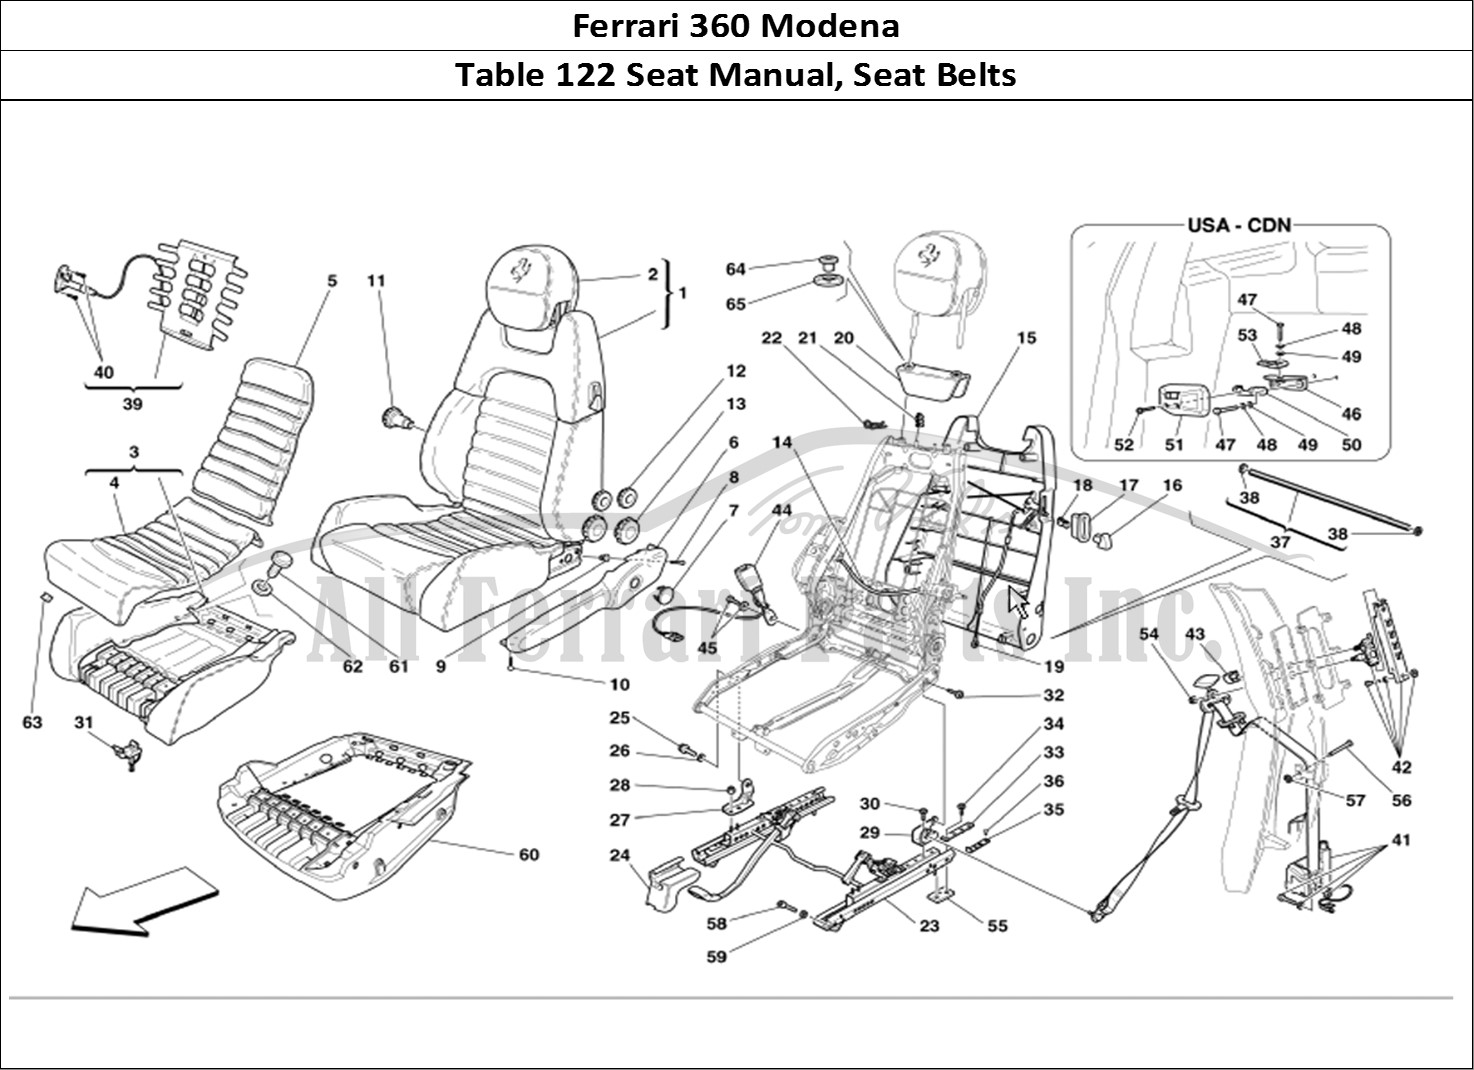 Ferrari Parts Ferrari 360 Modena Page 122 Manual Seat Safety Belts